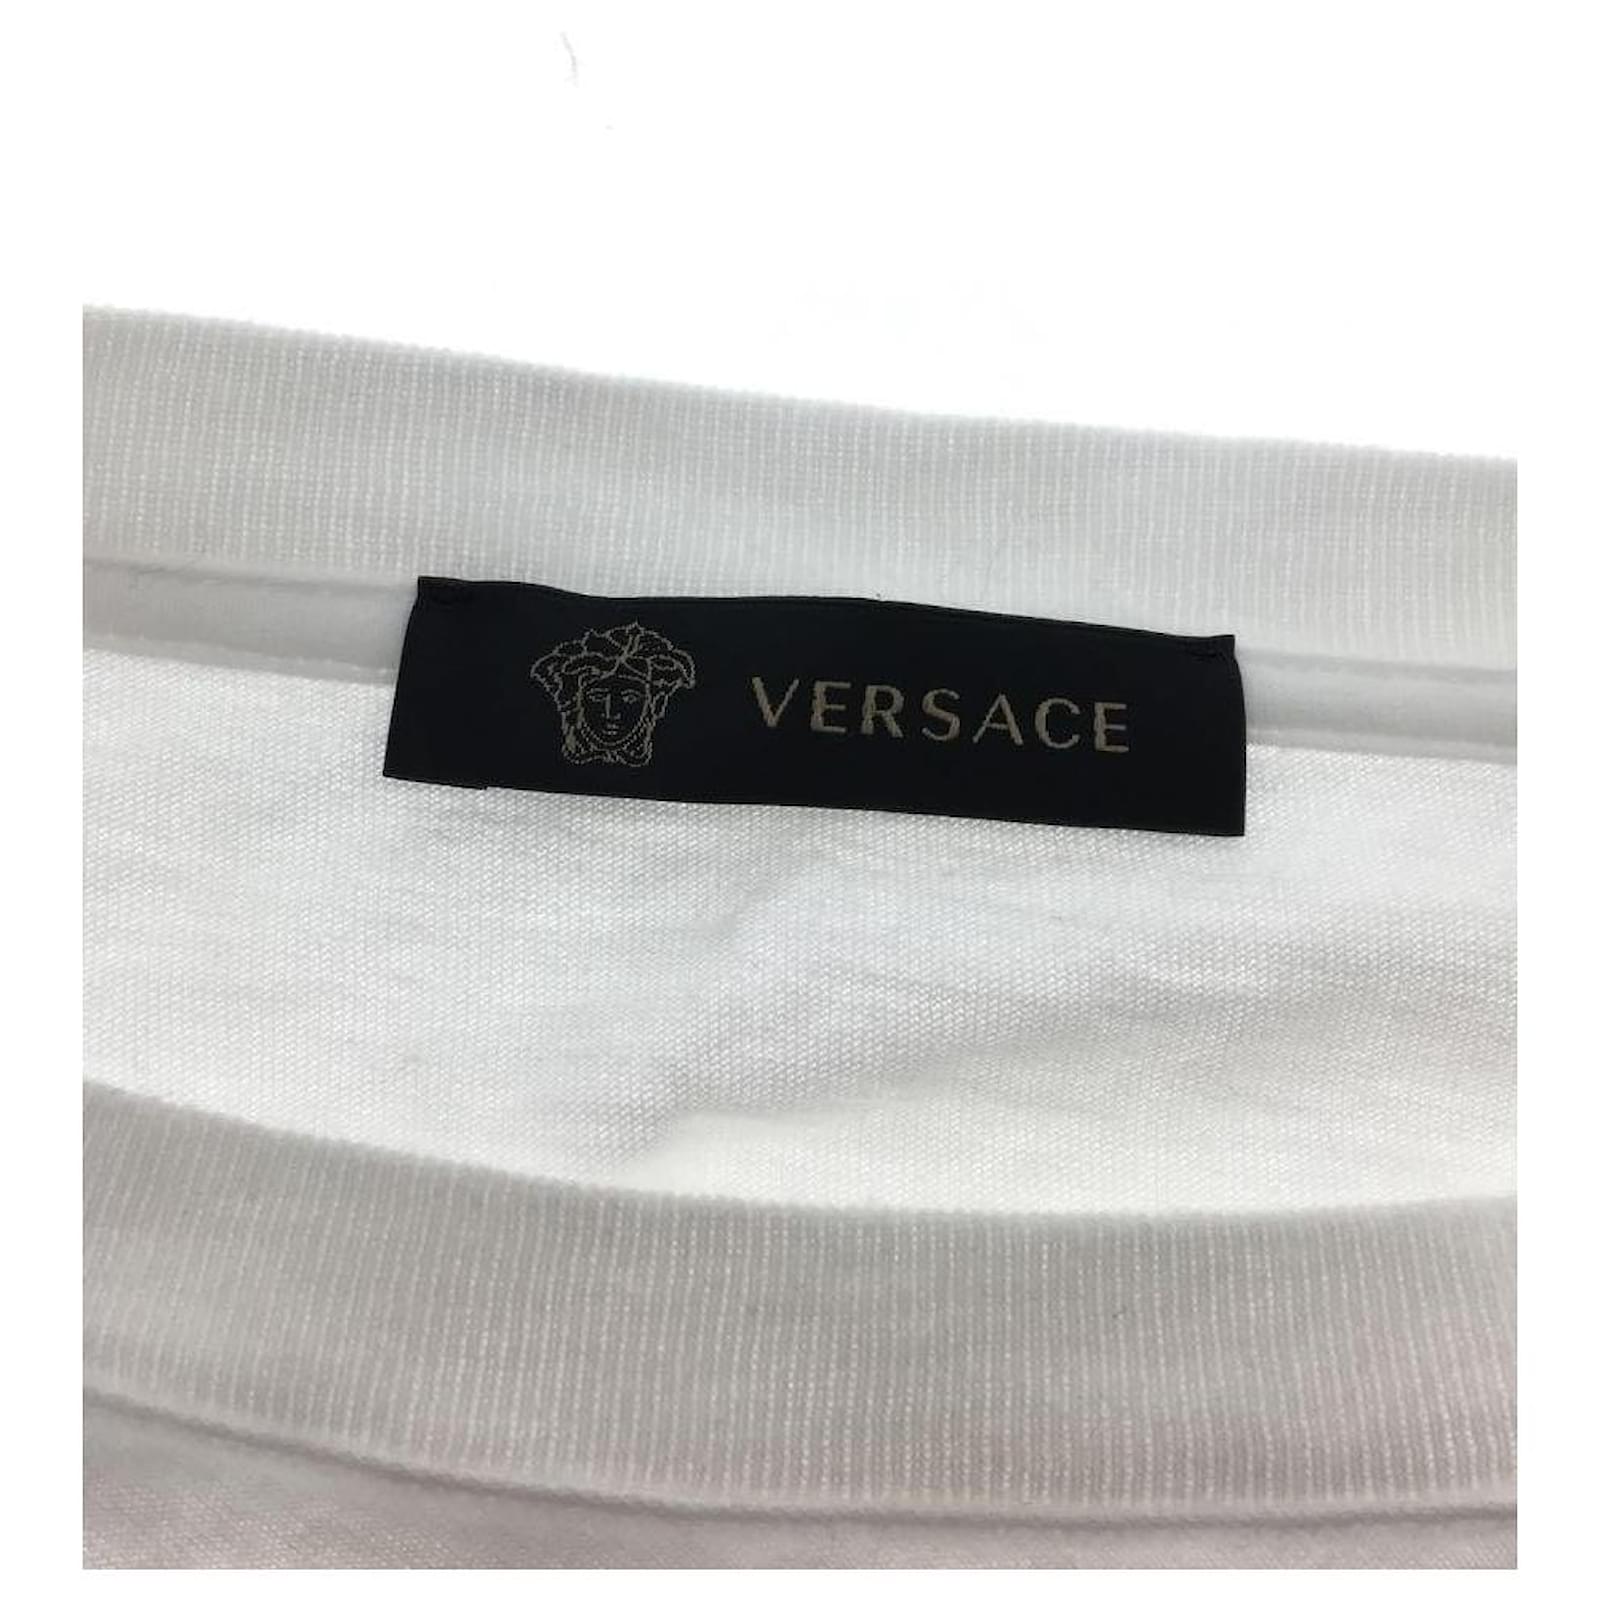 VERSACE T-shirt / XXL / Cotton / WHT / Floral pattern / A89501S A230901 ...